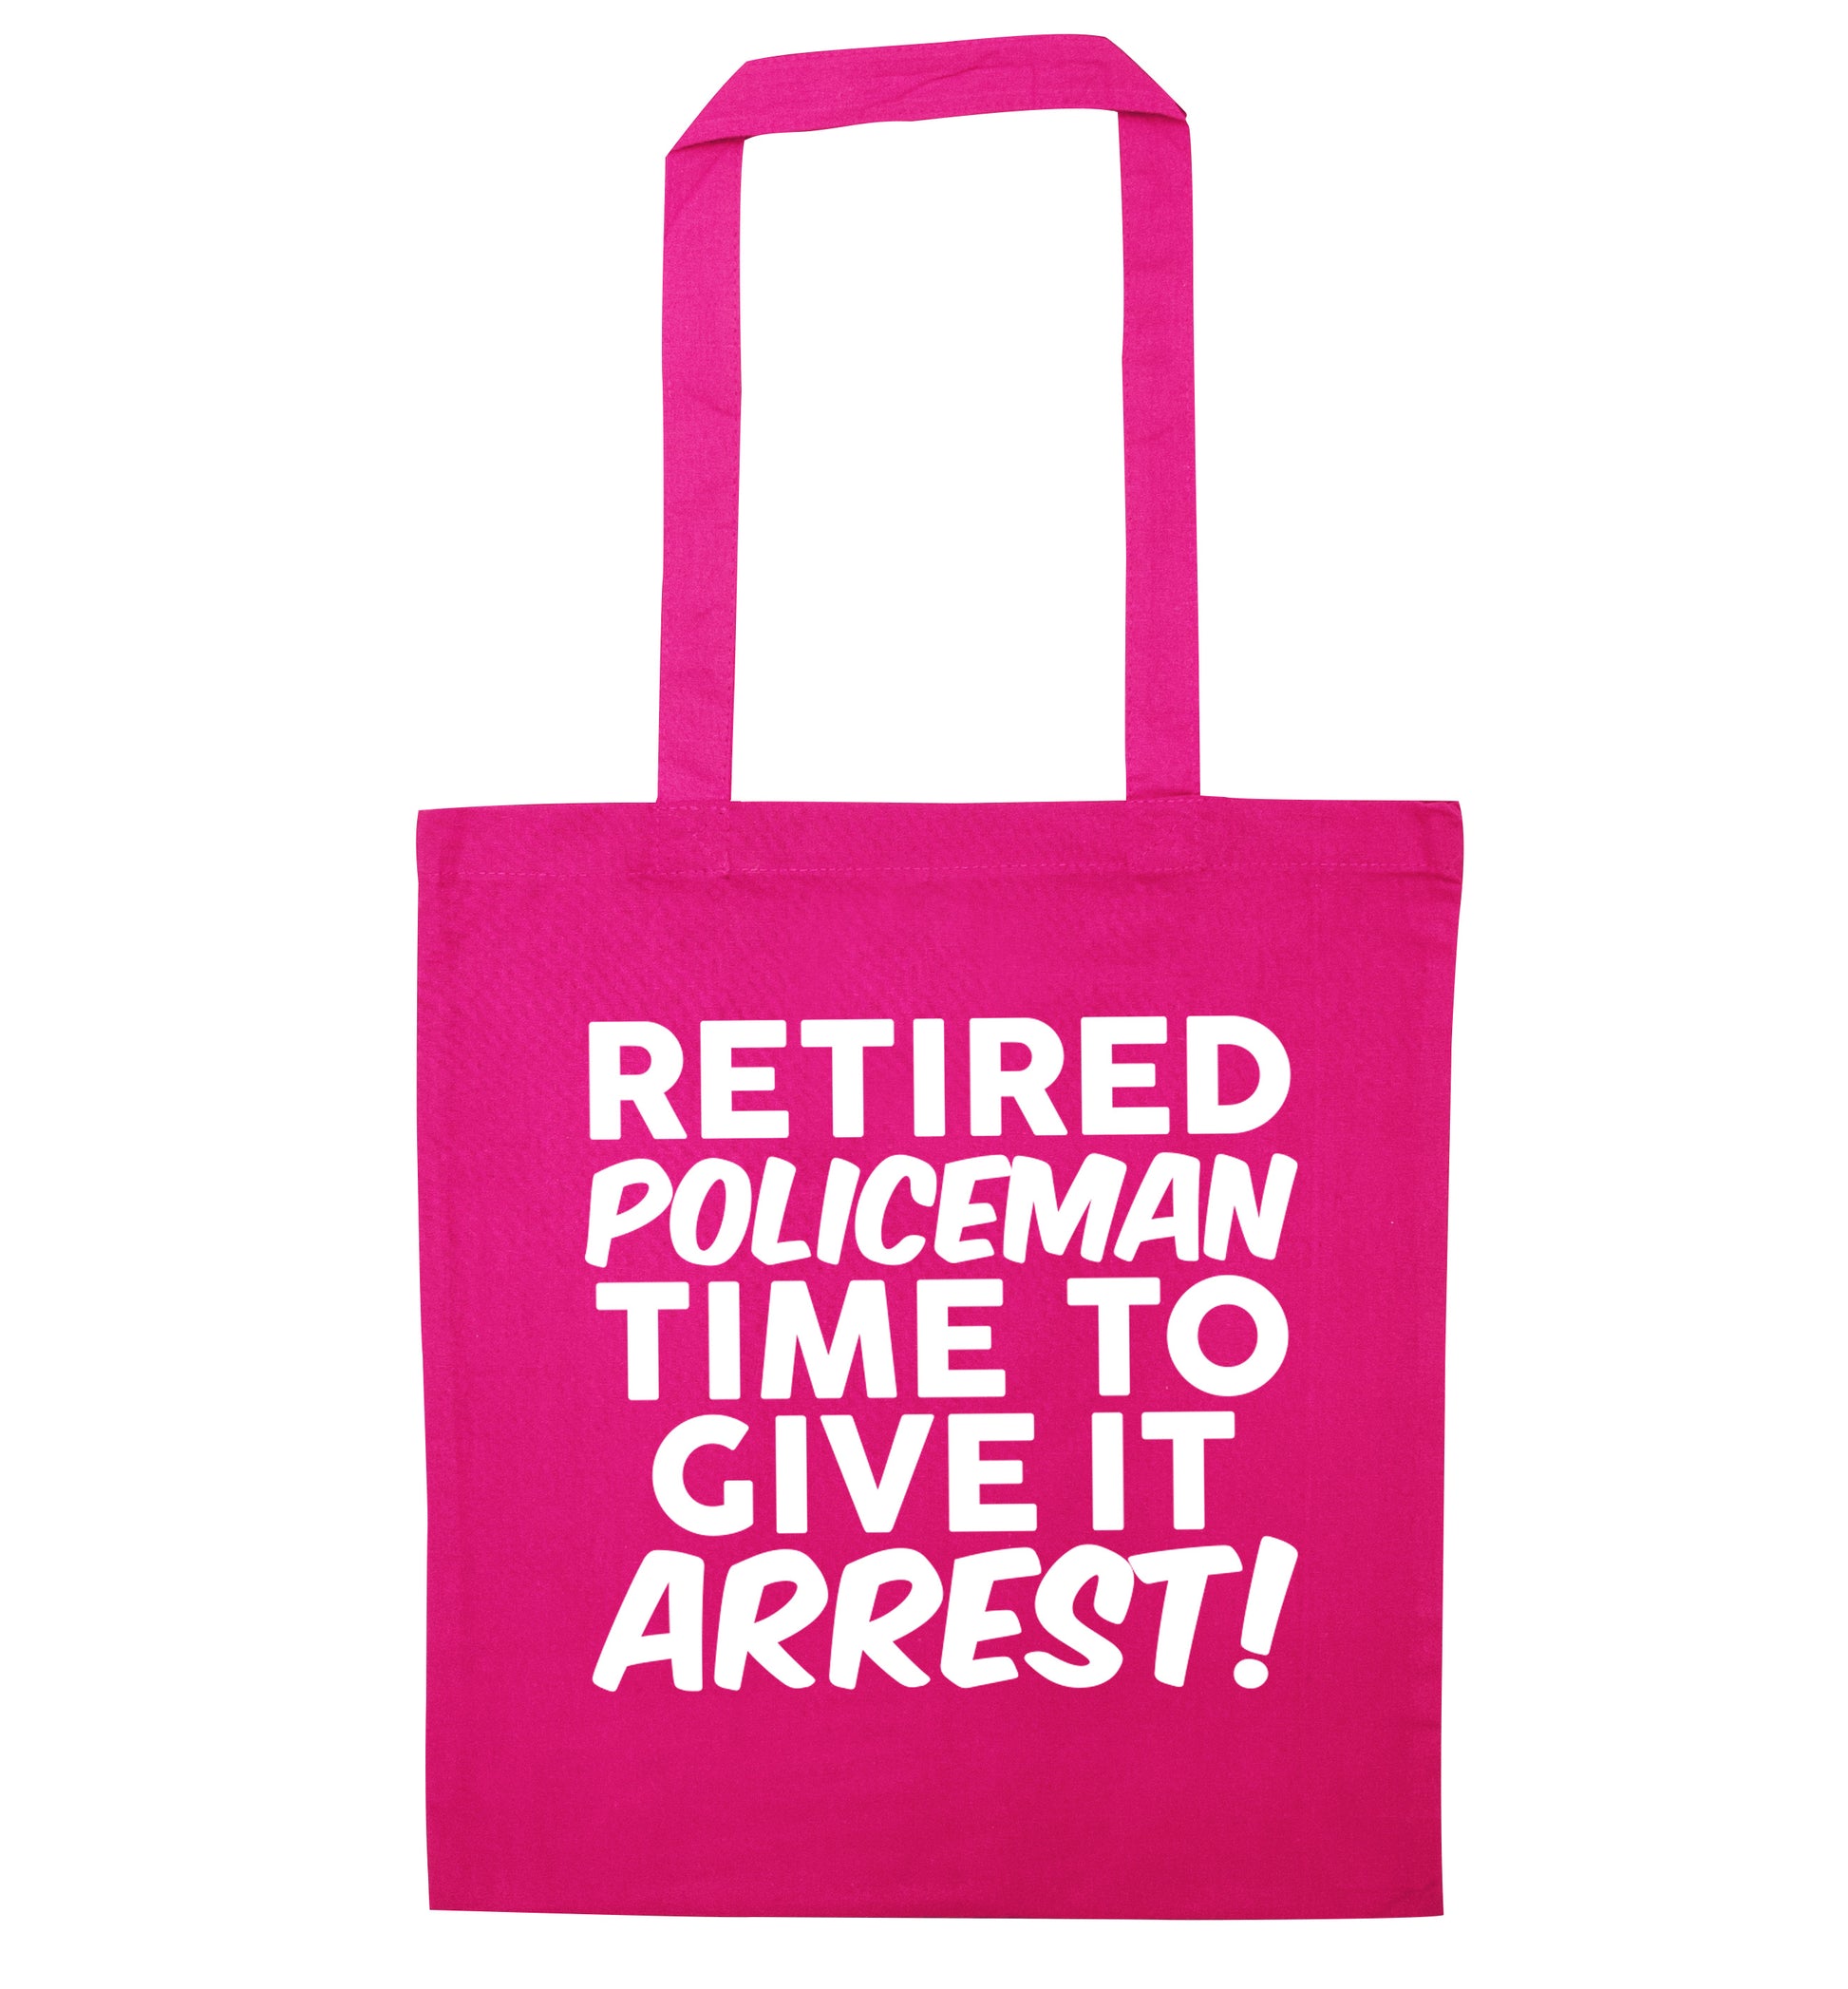 Retired policeman give it arresst! pink tote bag